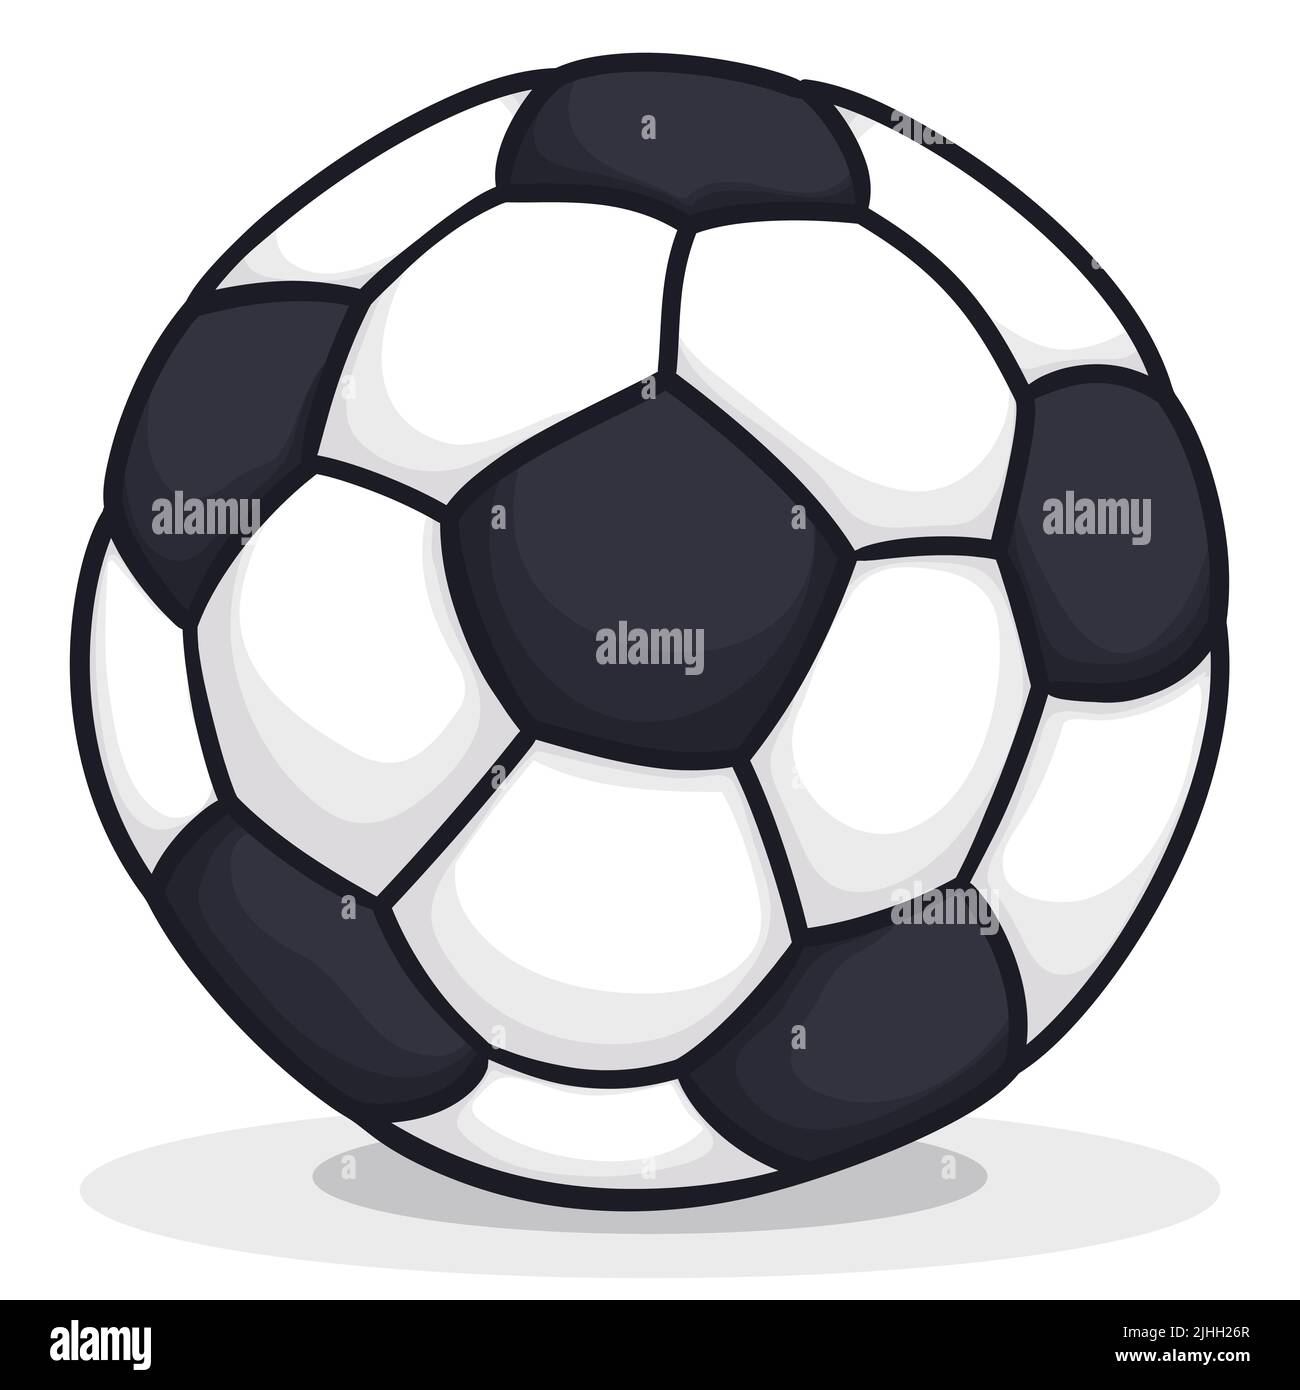 Design de style dessin animé de ballon de football, isolé sur fond blanc  Image Vectorielle Stock - Alamy